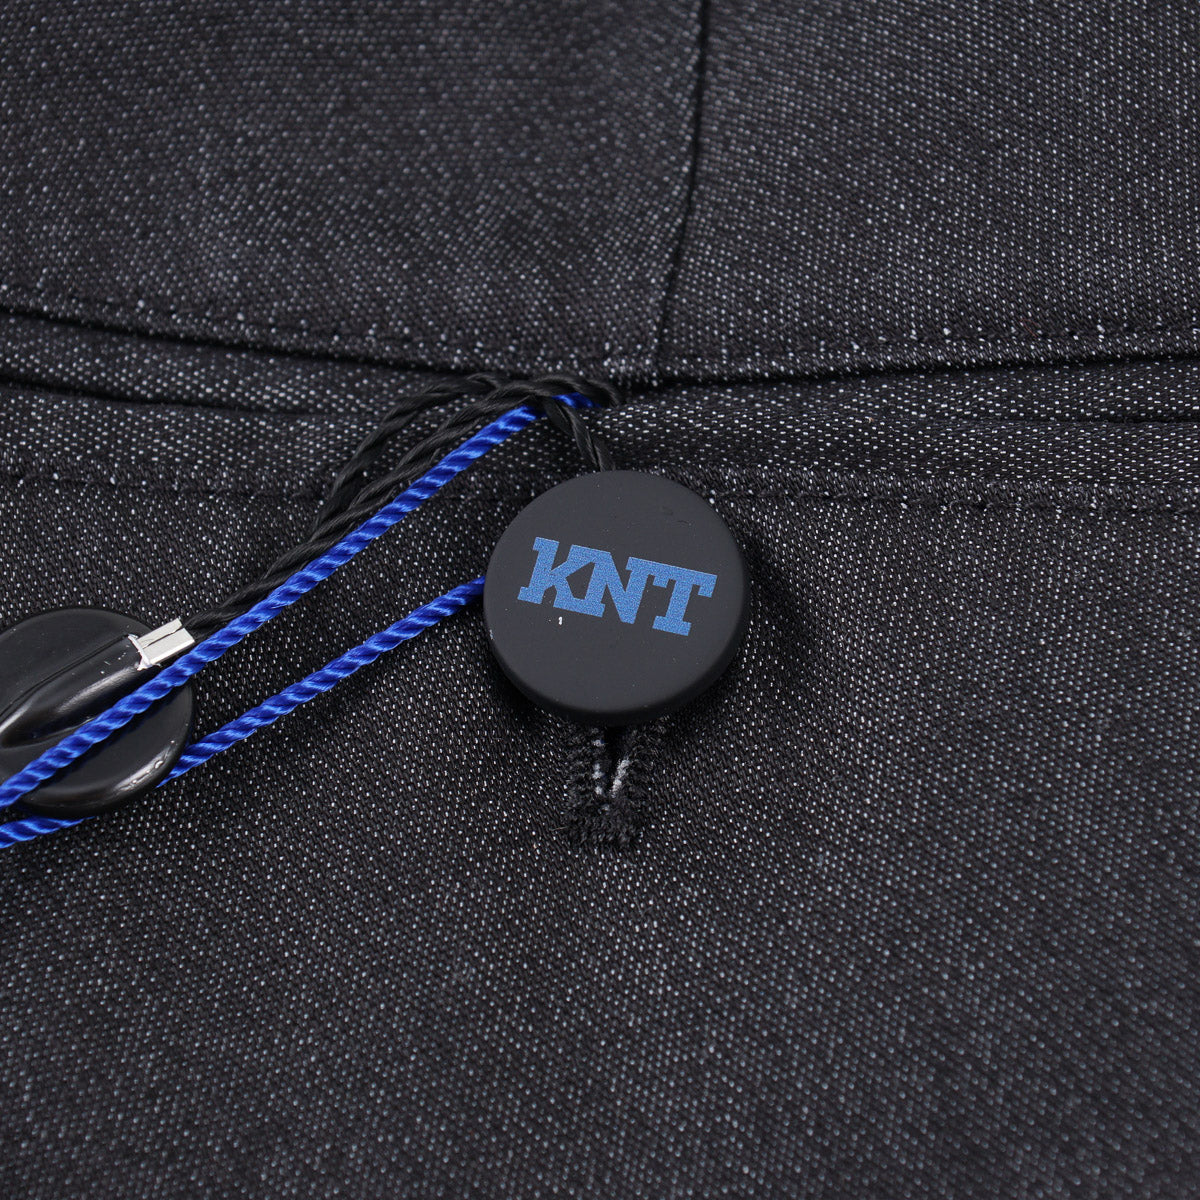 Kiton KNT Charcoal Denim Jogger Pants - Top Shelf Apparel